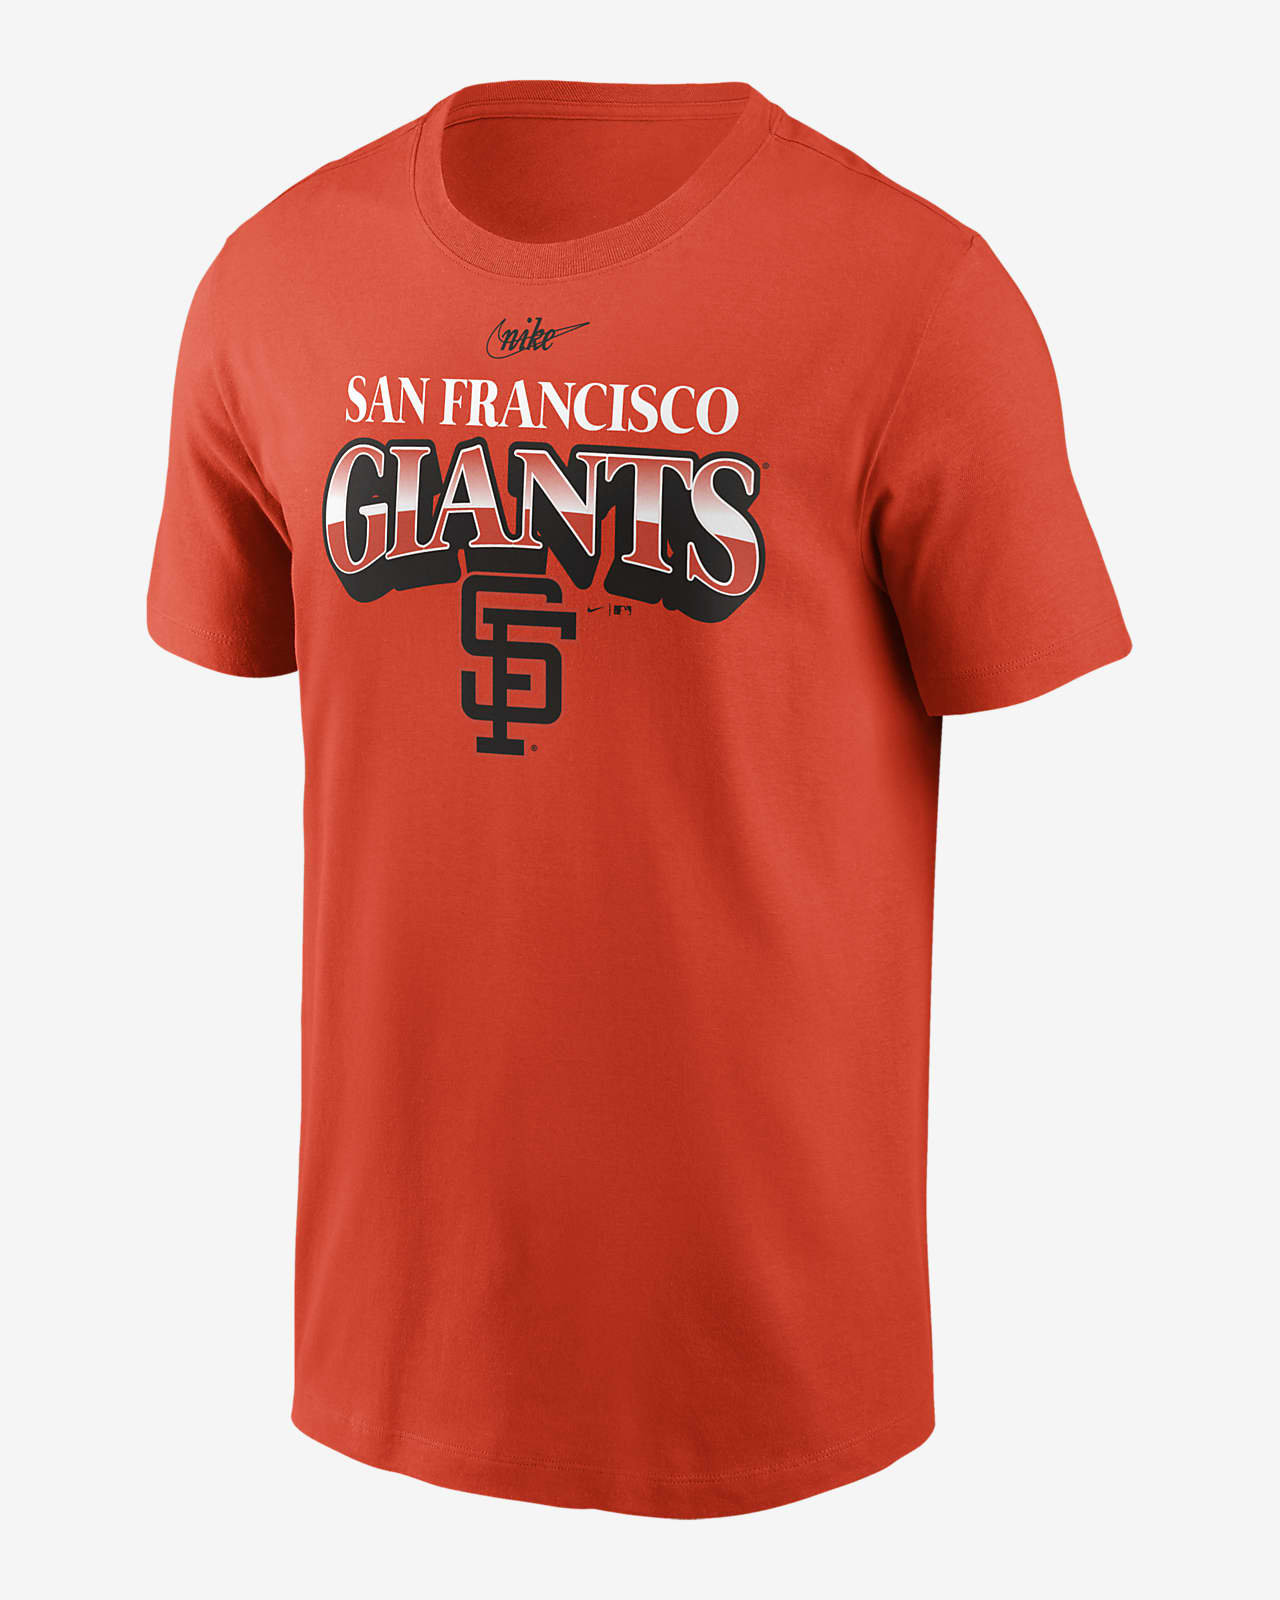 Nike Cooperstown Rewind Arch (MLB San Francisco Giants) Men's T-Shirt